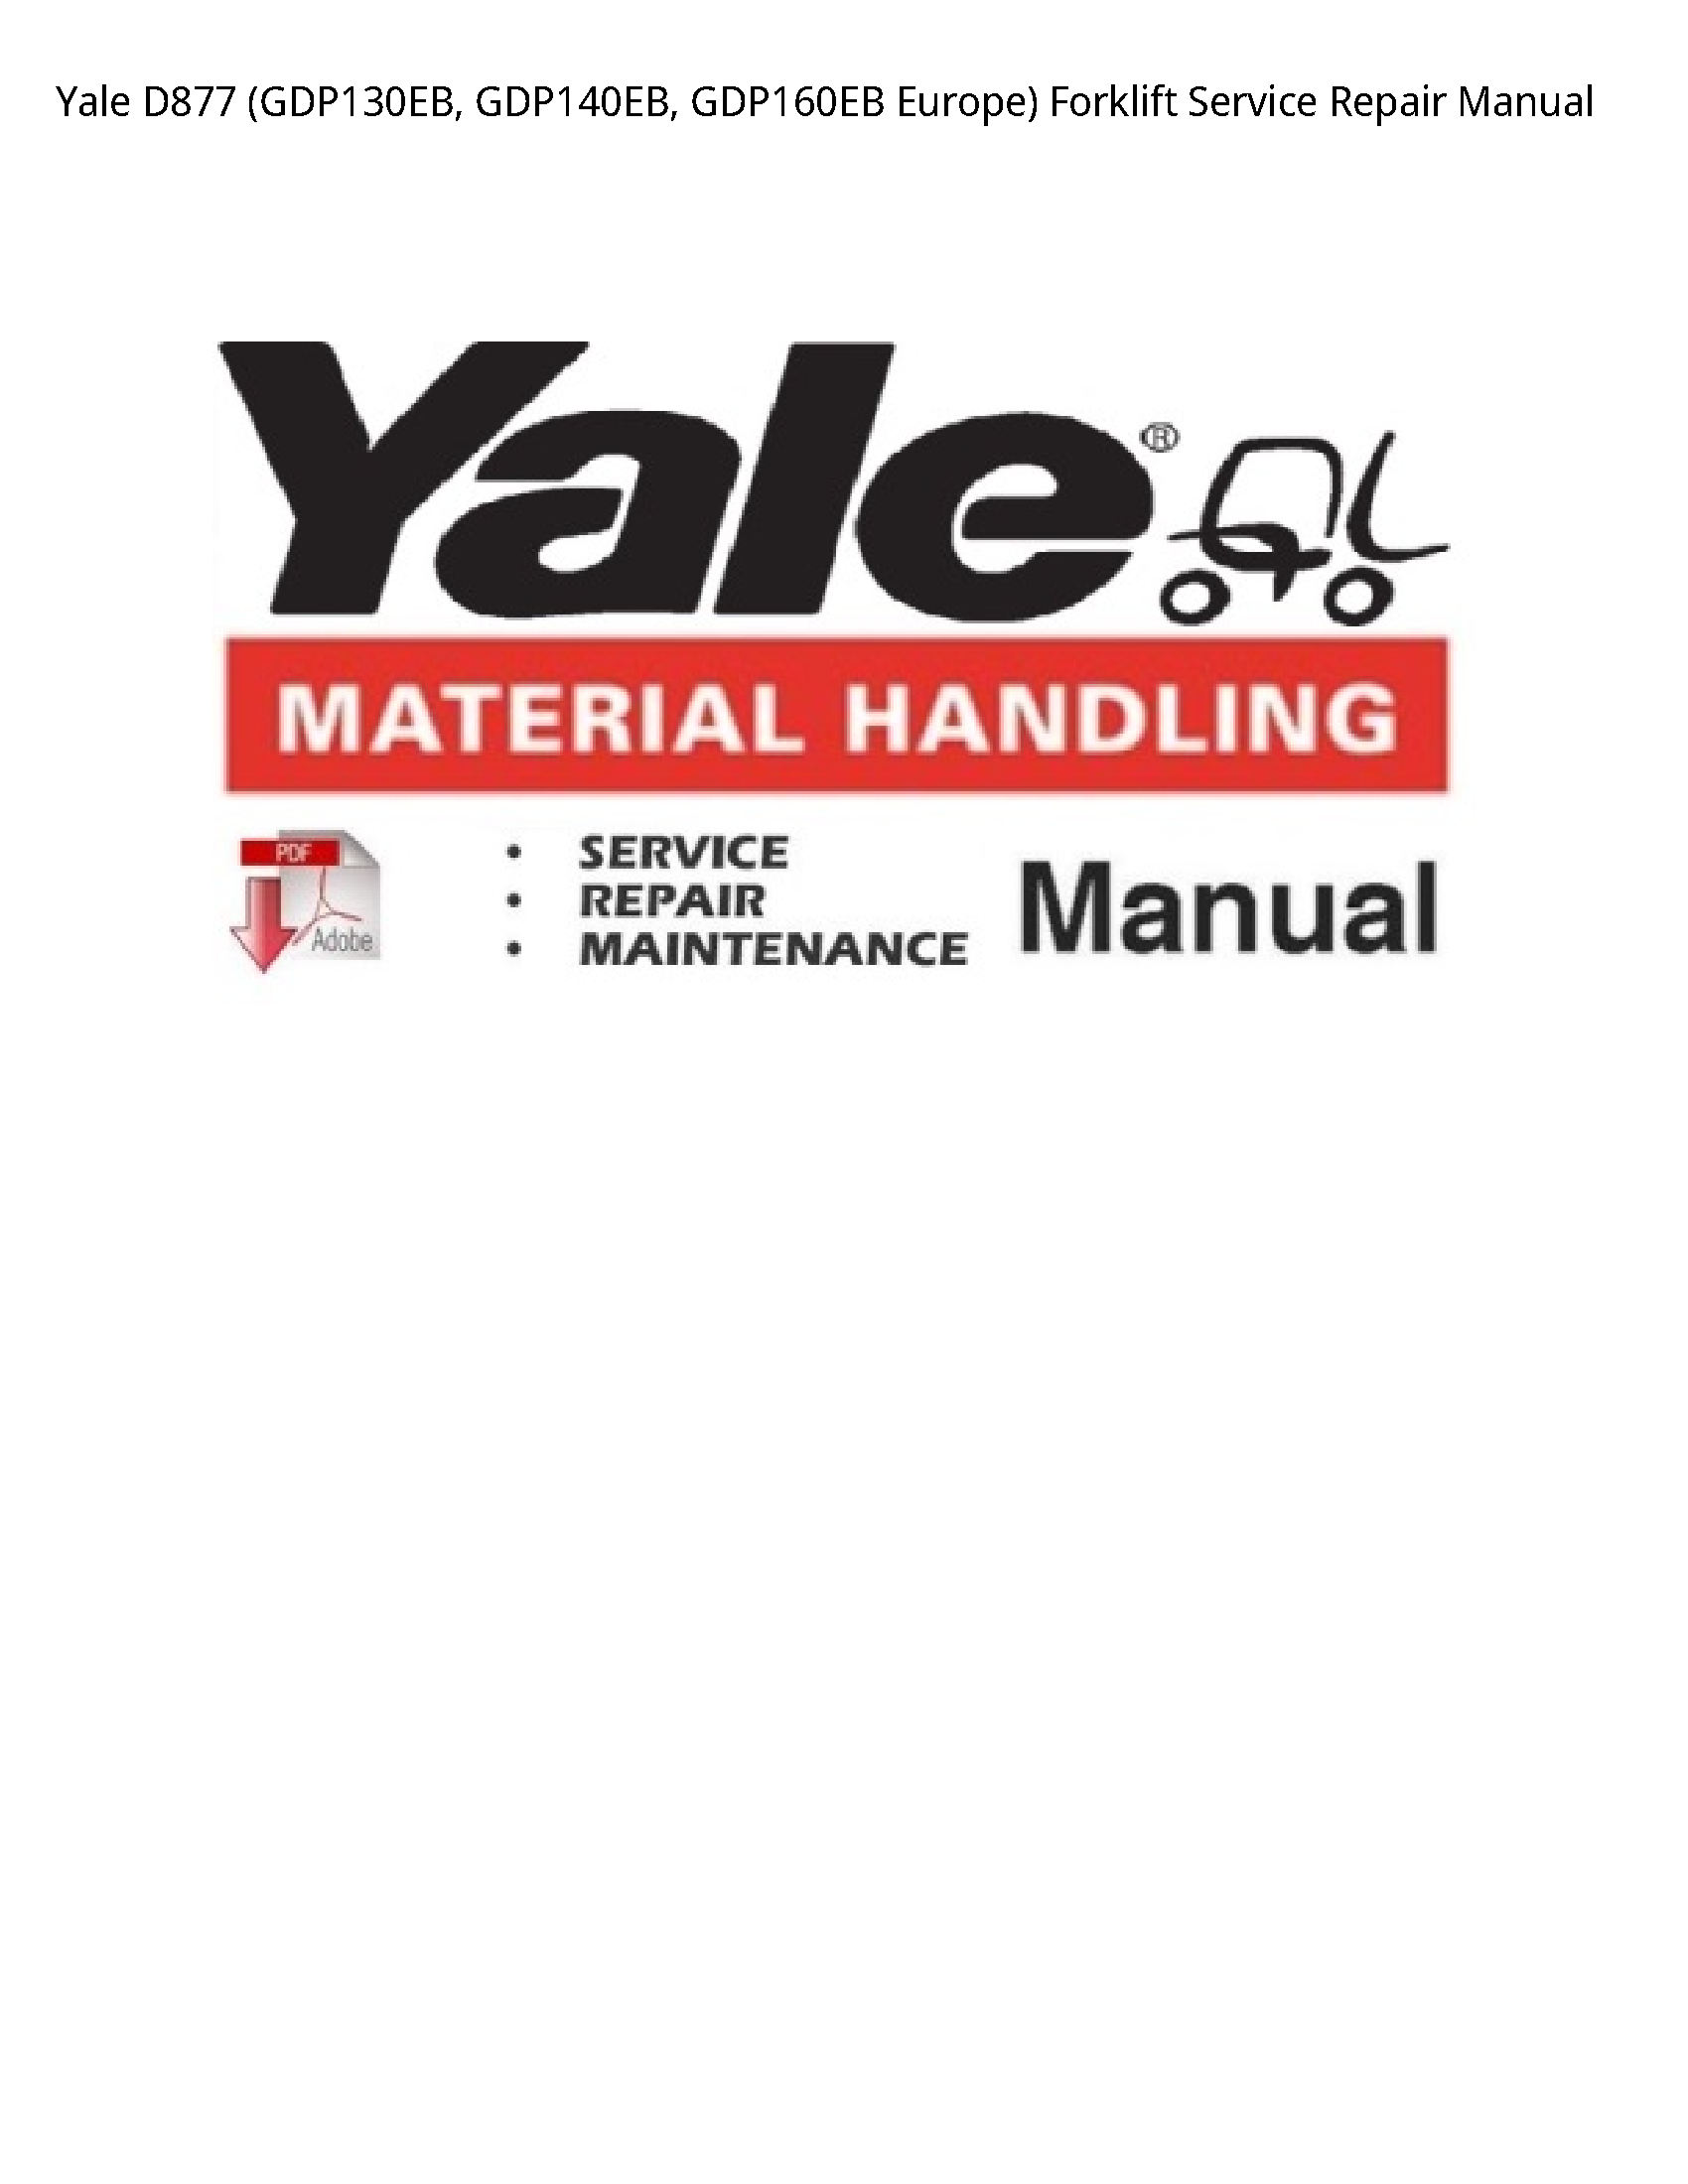 Yale D877 Europe) Forklift manual